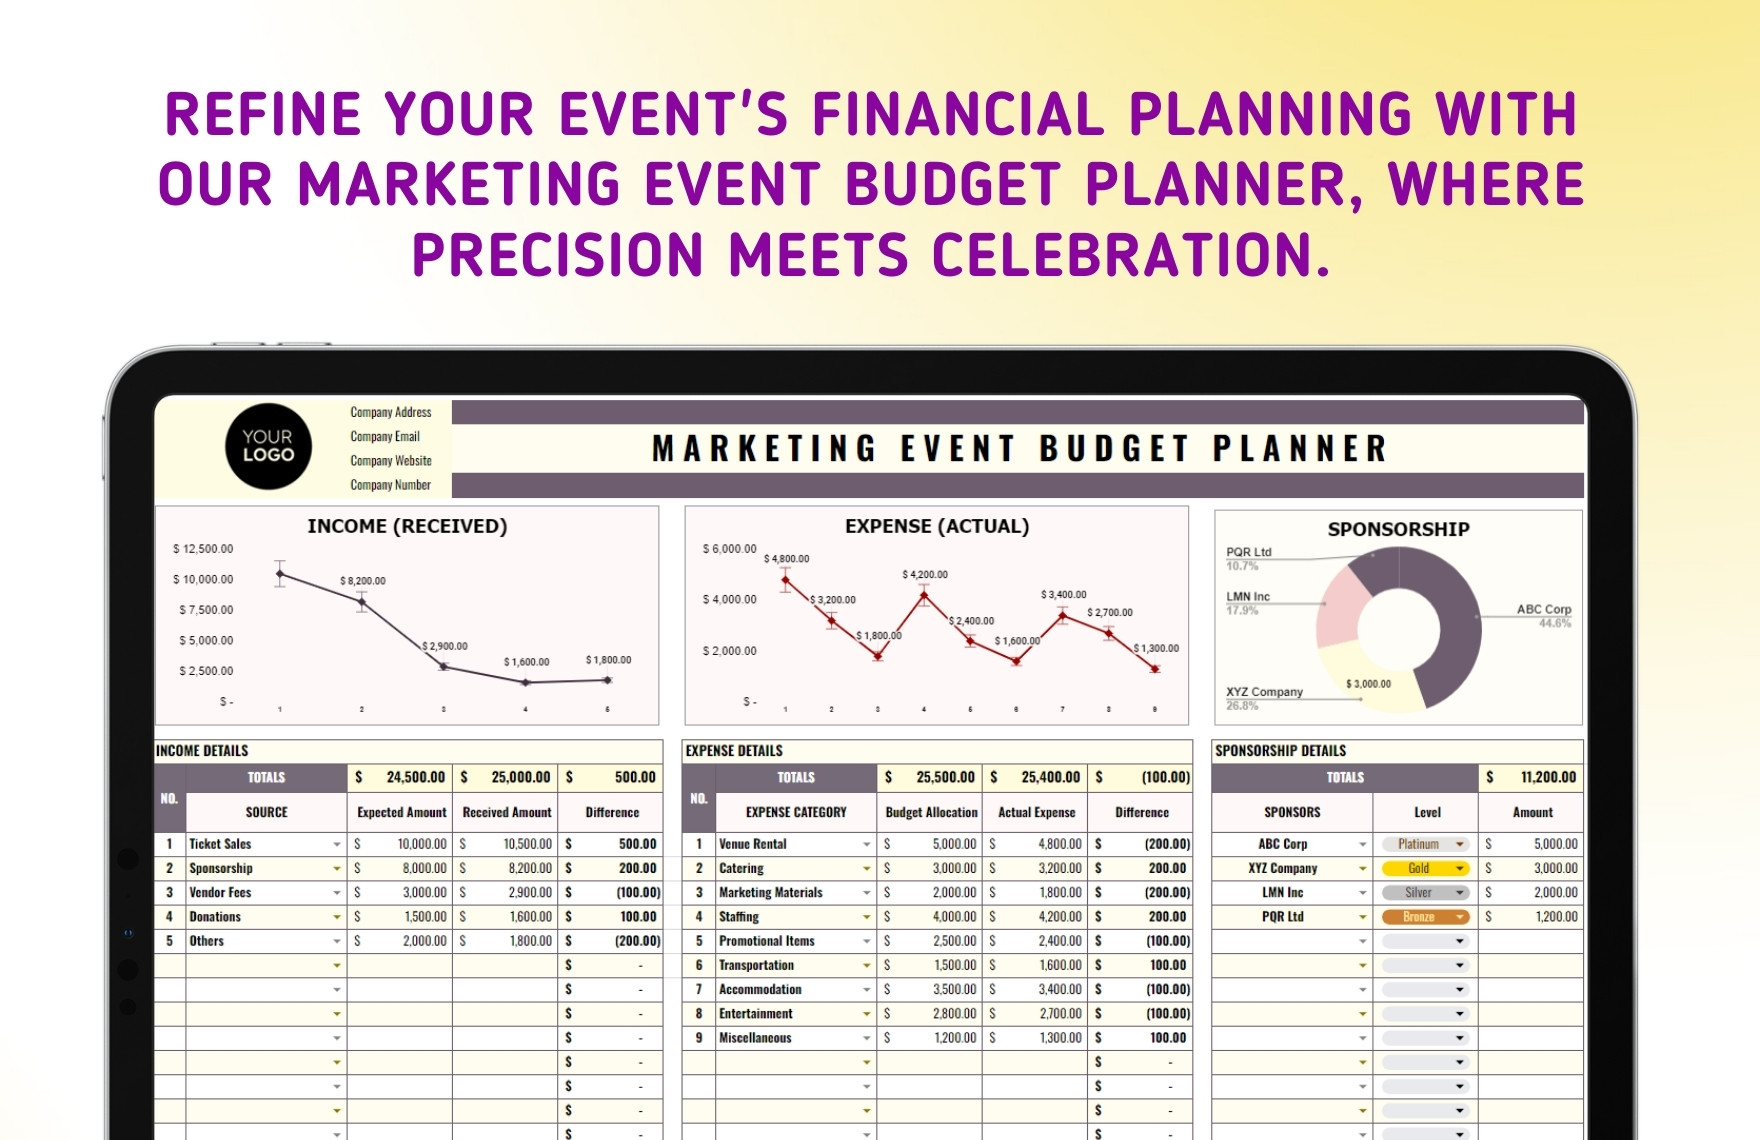 Marketing Event Budget Planner Template